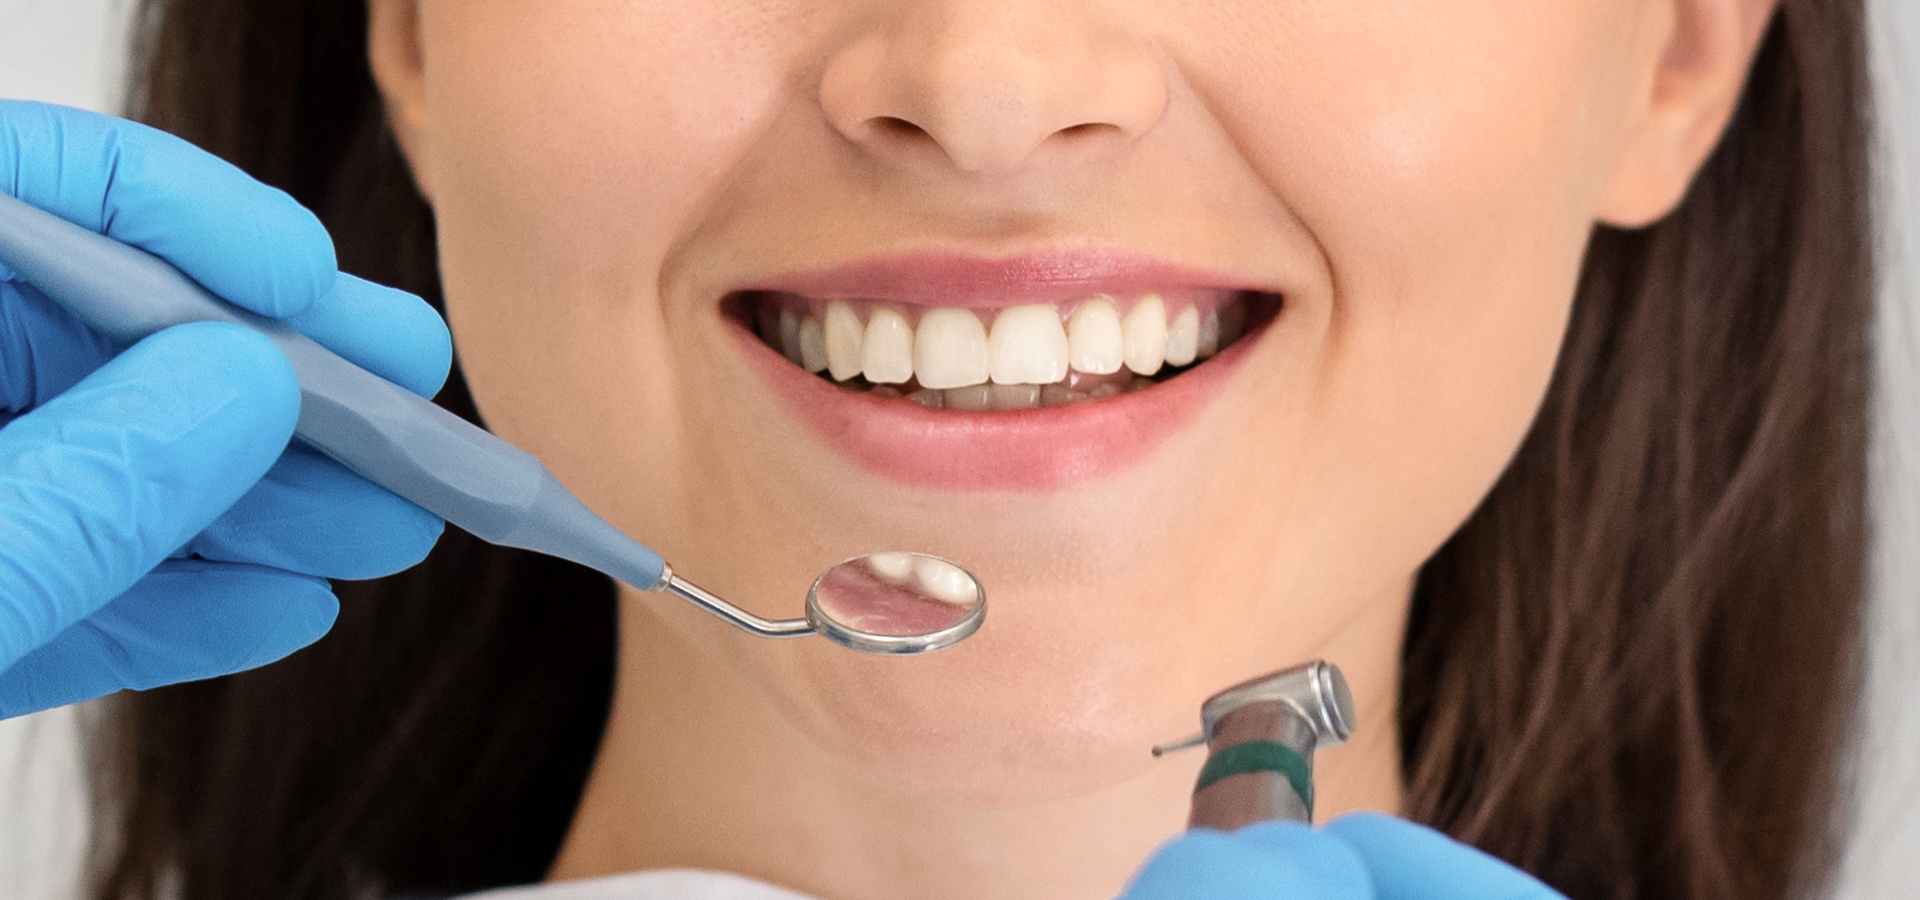 Clínica Dental Uradent tratamiento de periodoncia